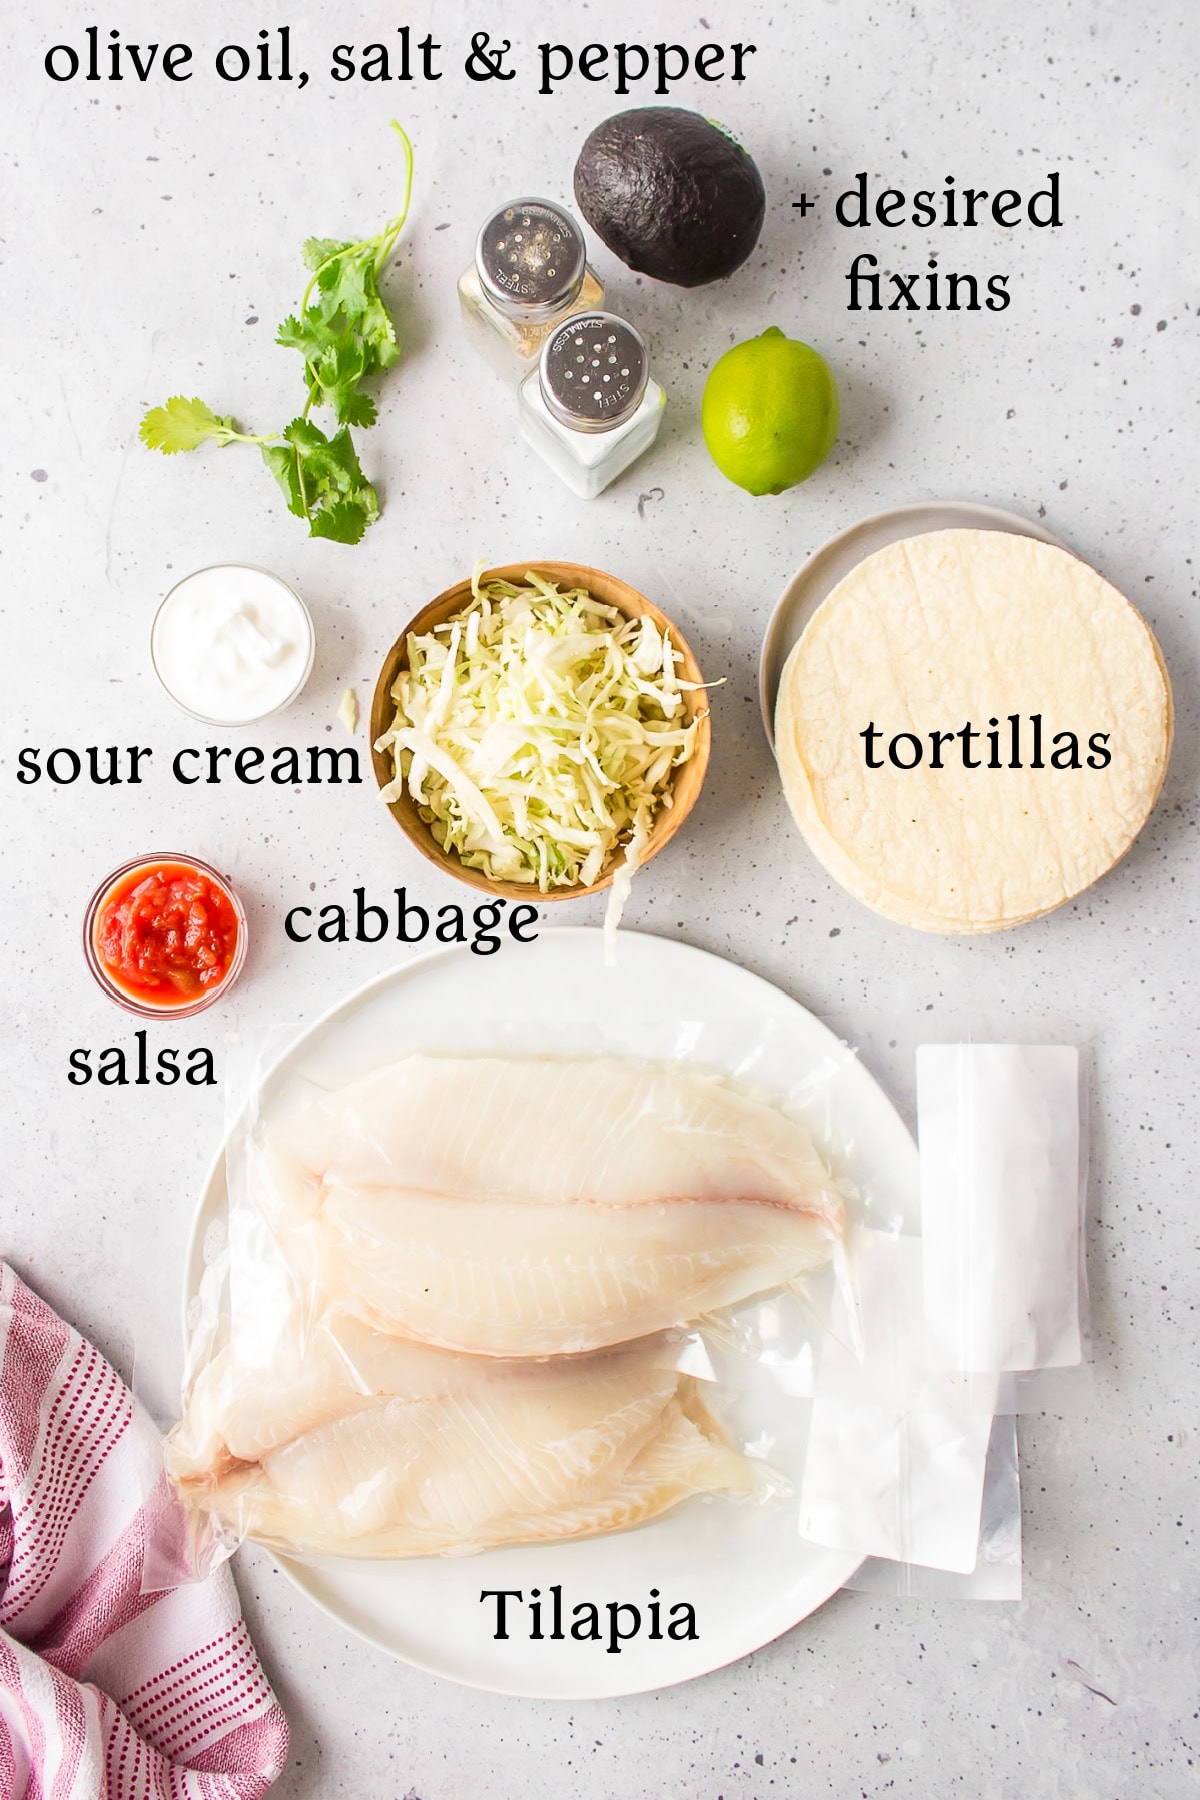 ingredients displayed for making fast fish tacos